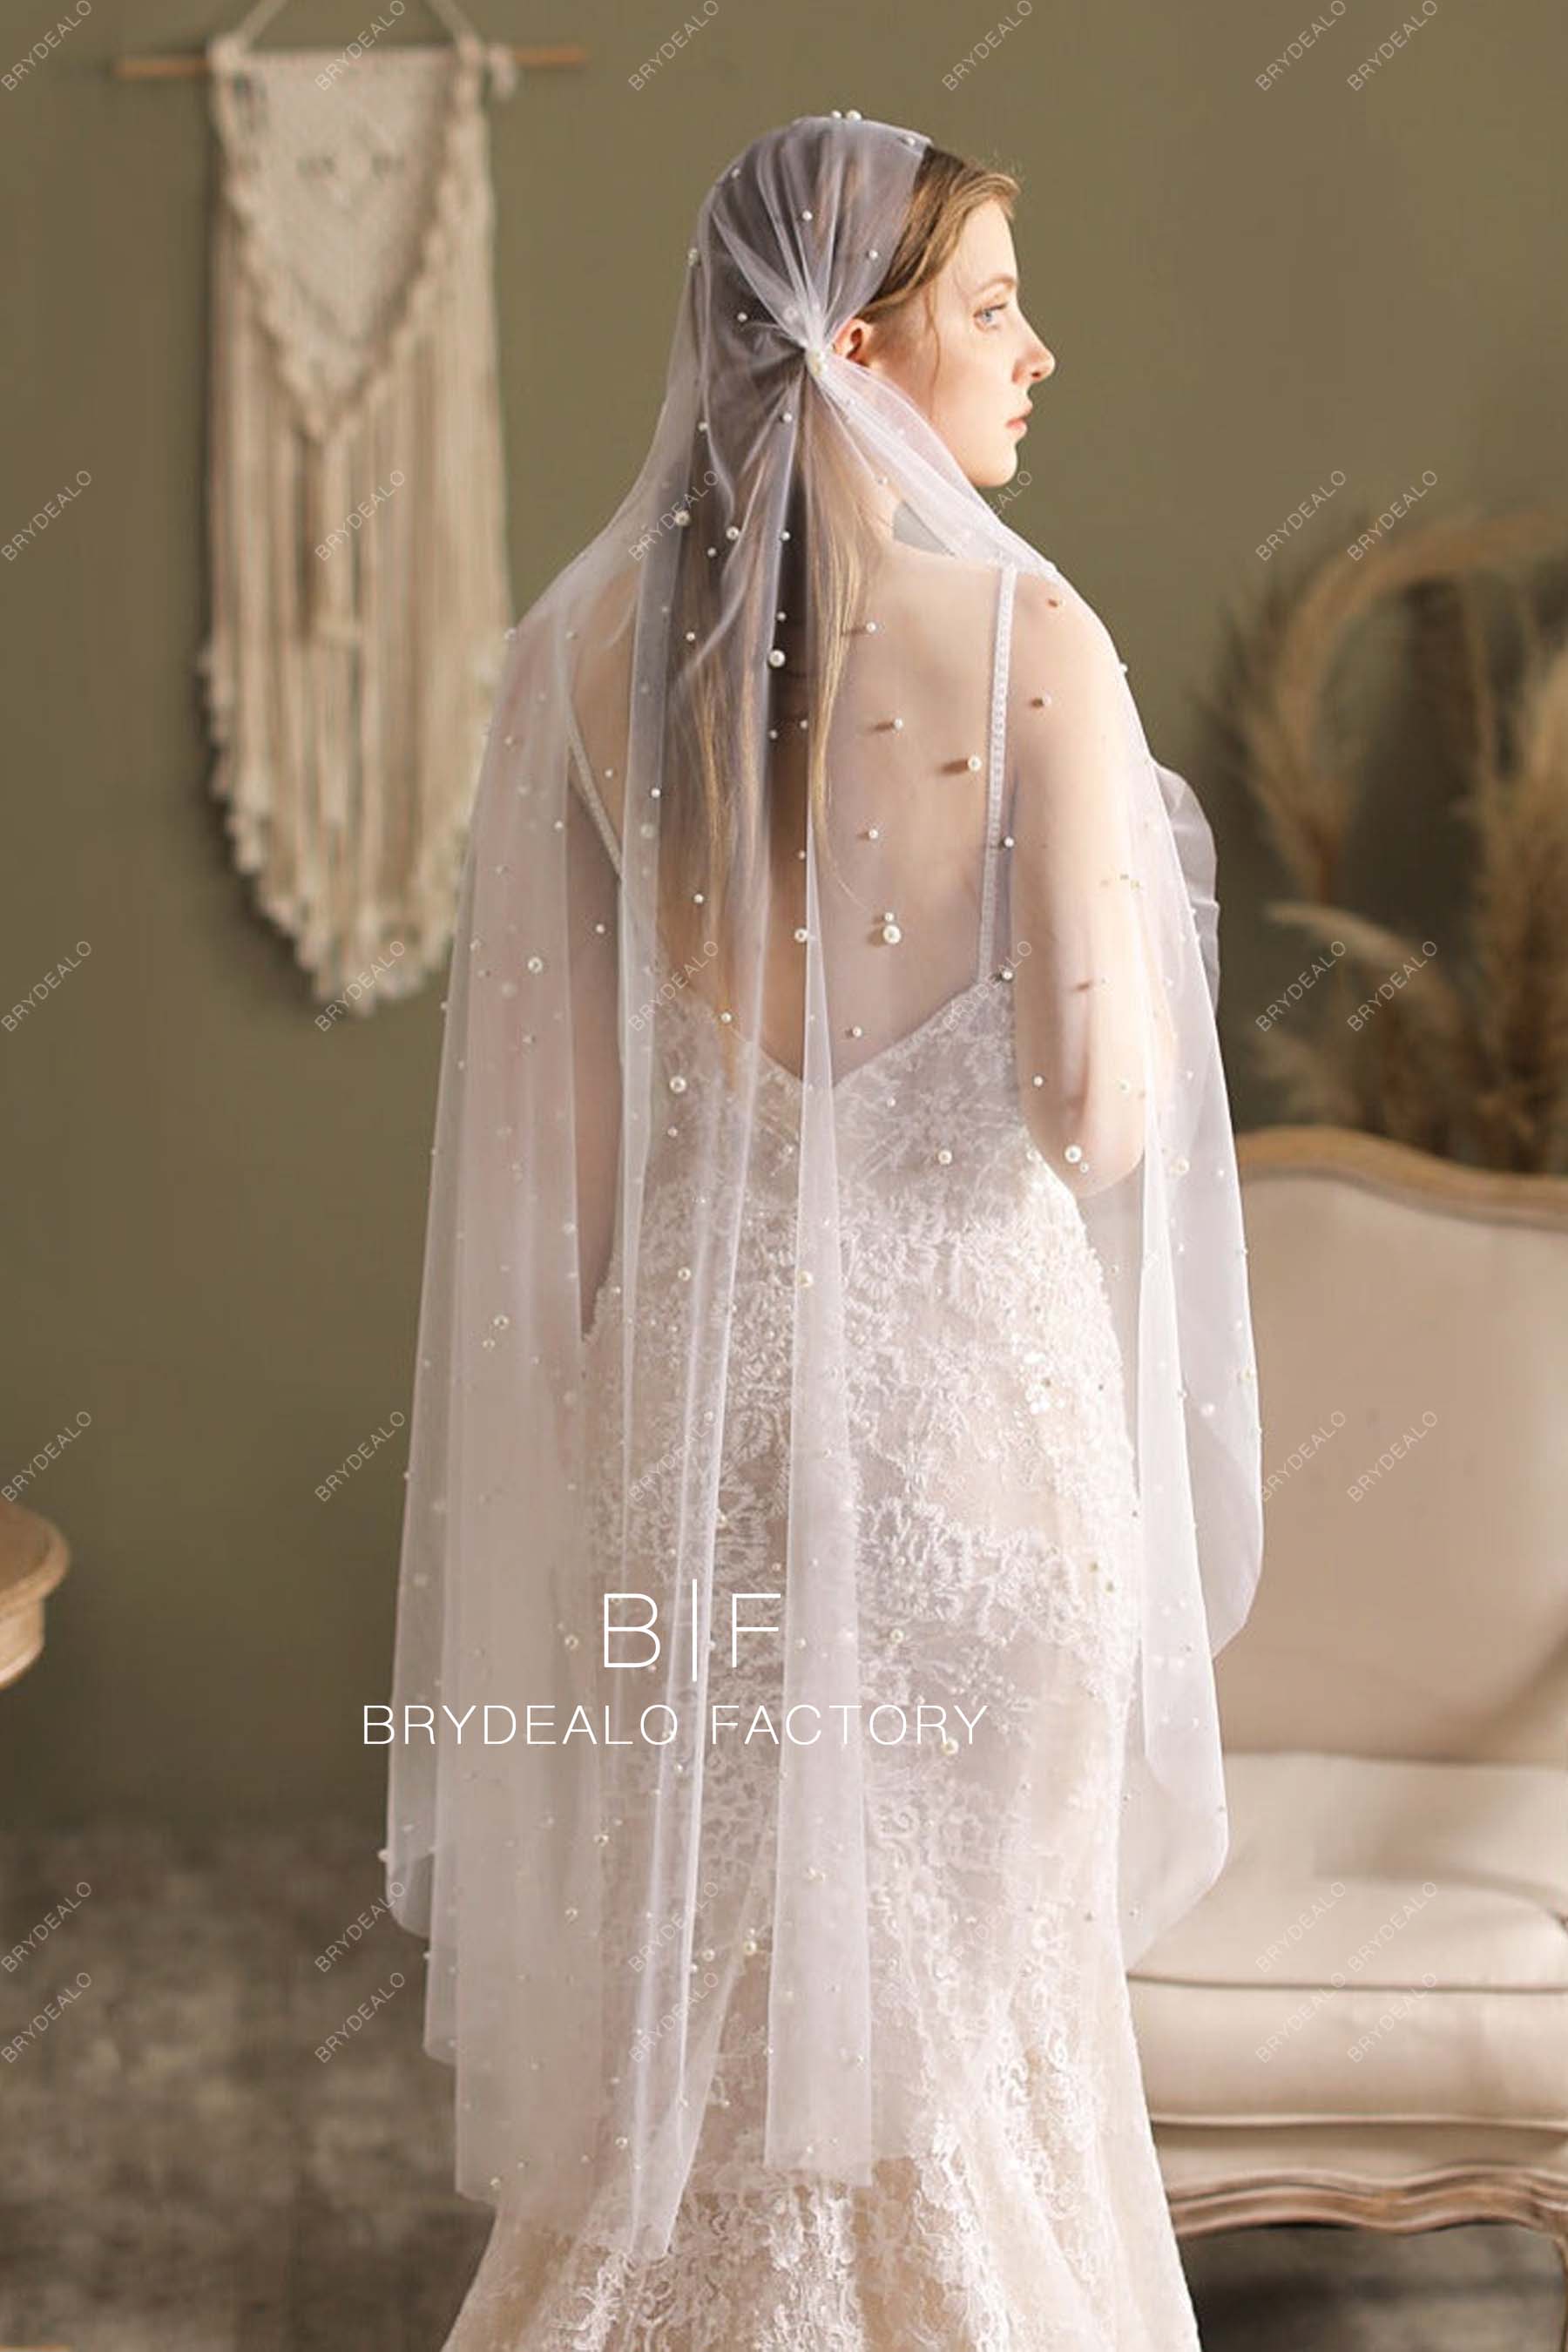 Brydealo Factory Private Label Ballet Length Horsehair Bridal Veil